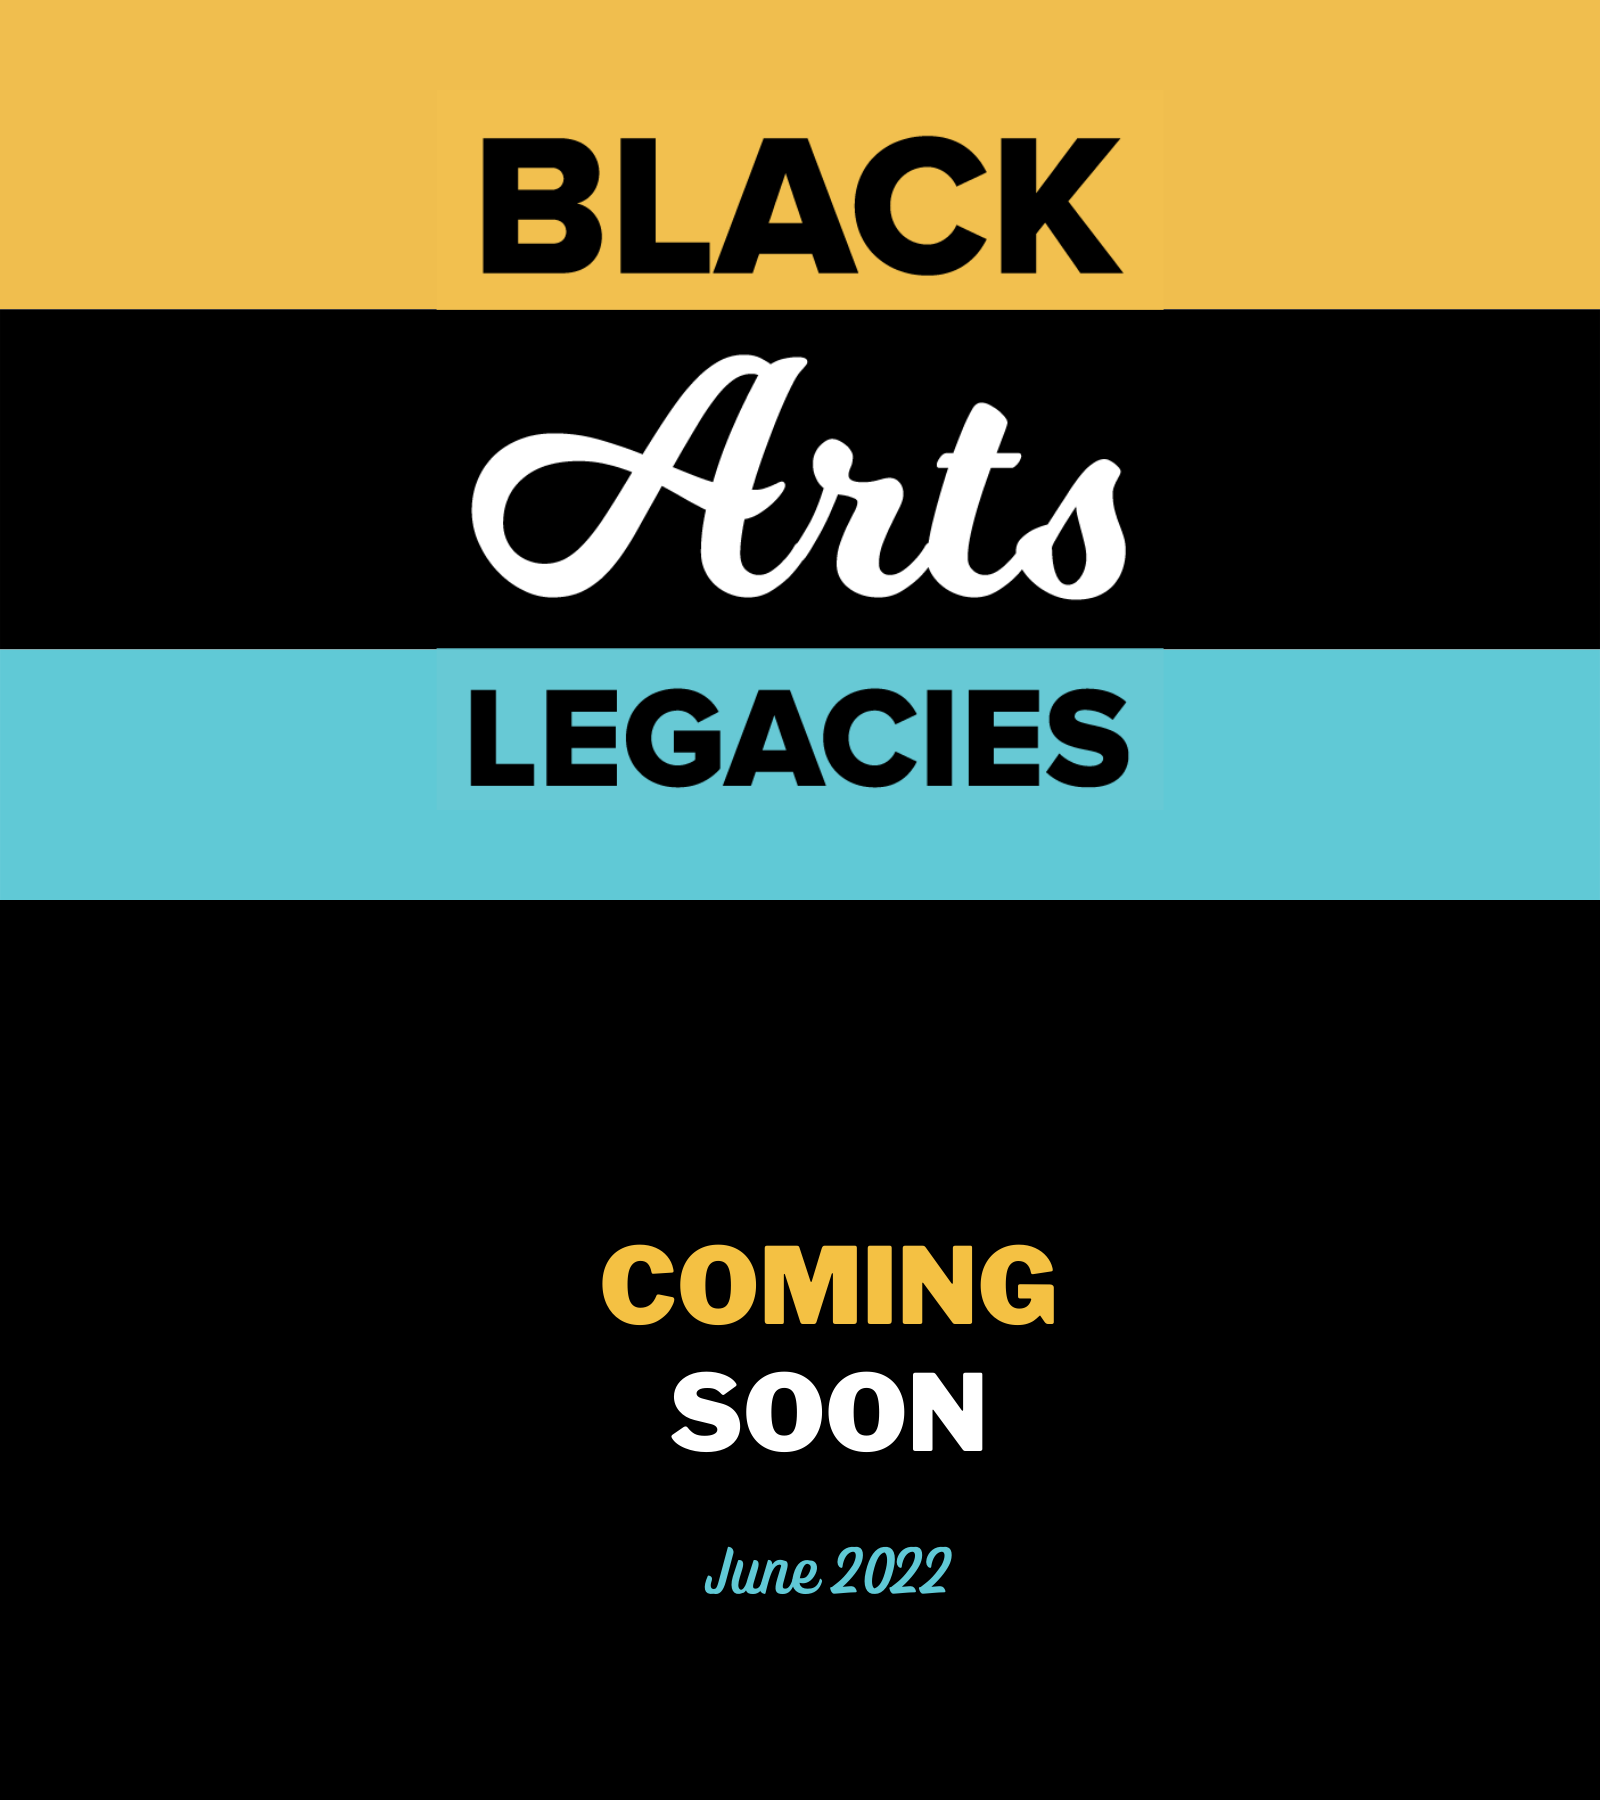 Black arts legacies coming soon